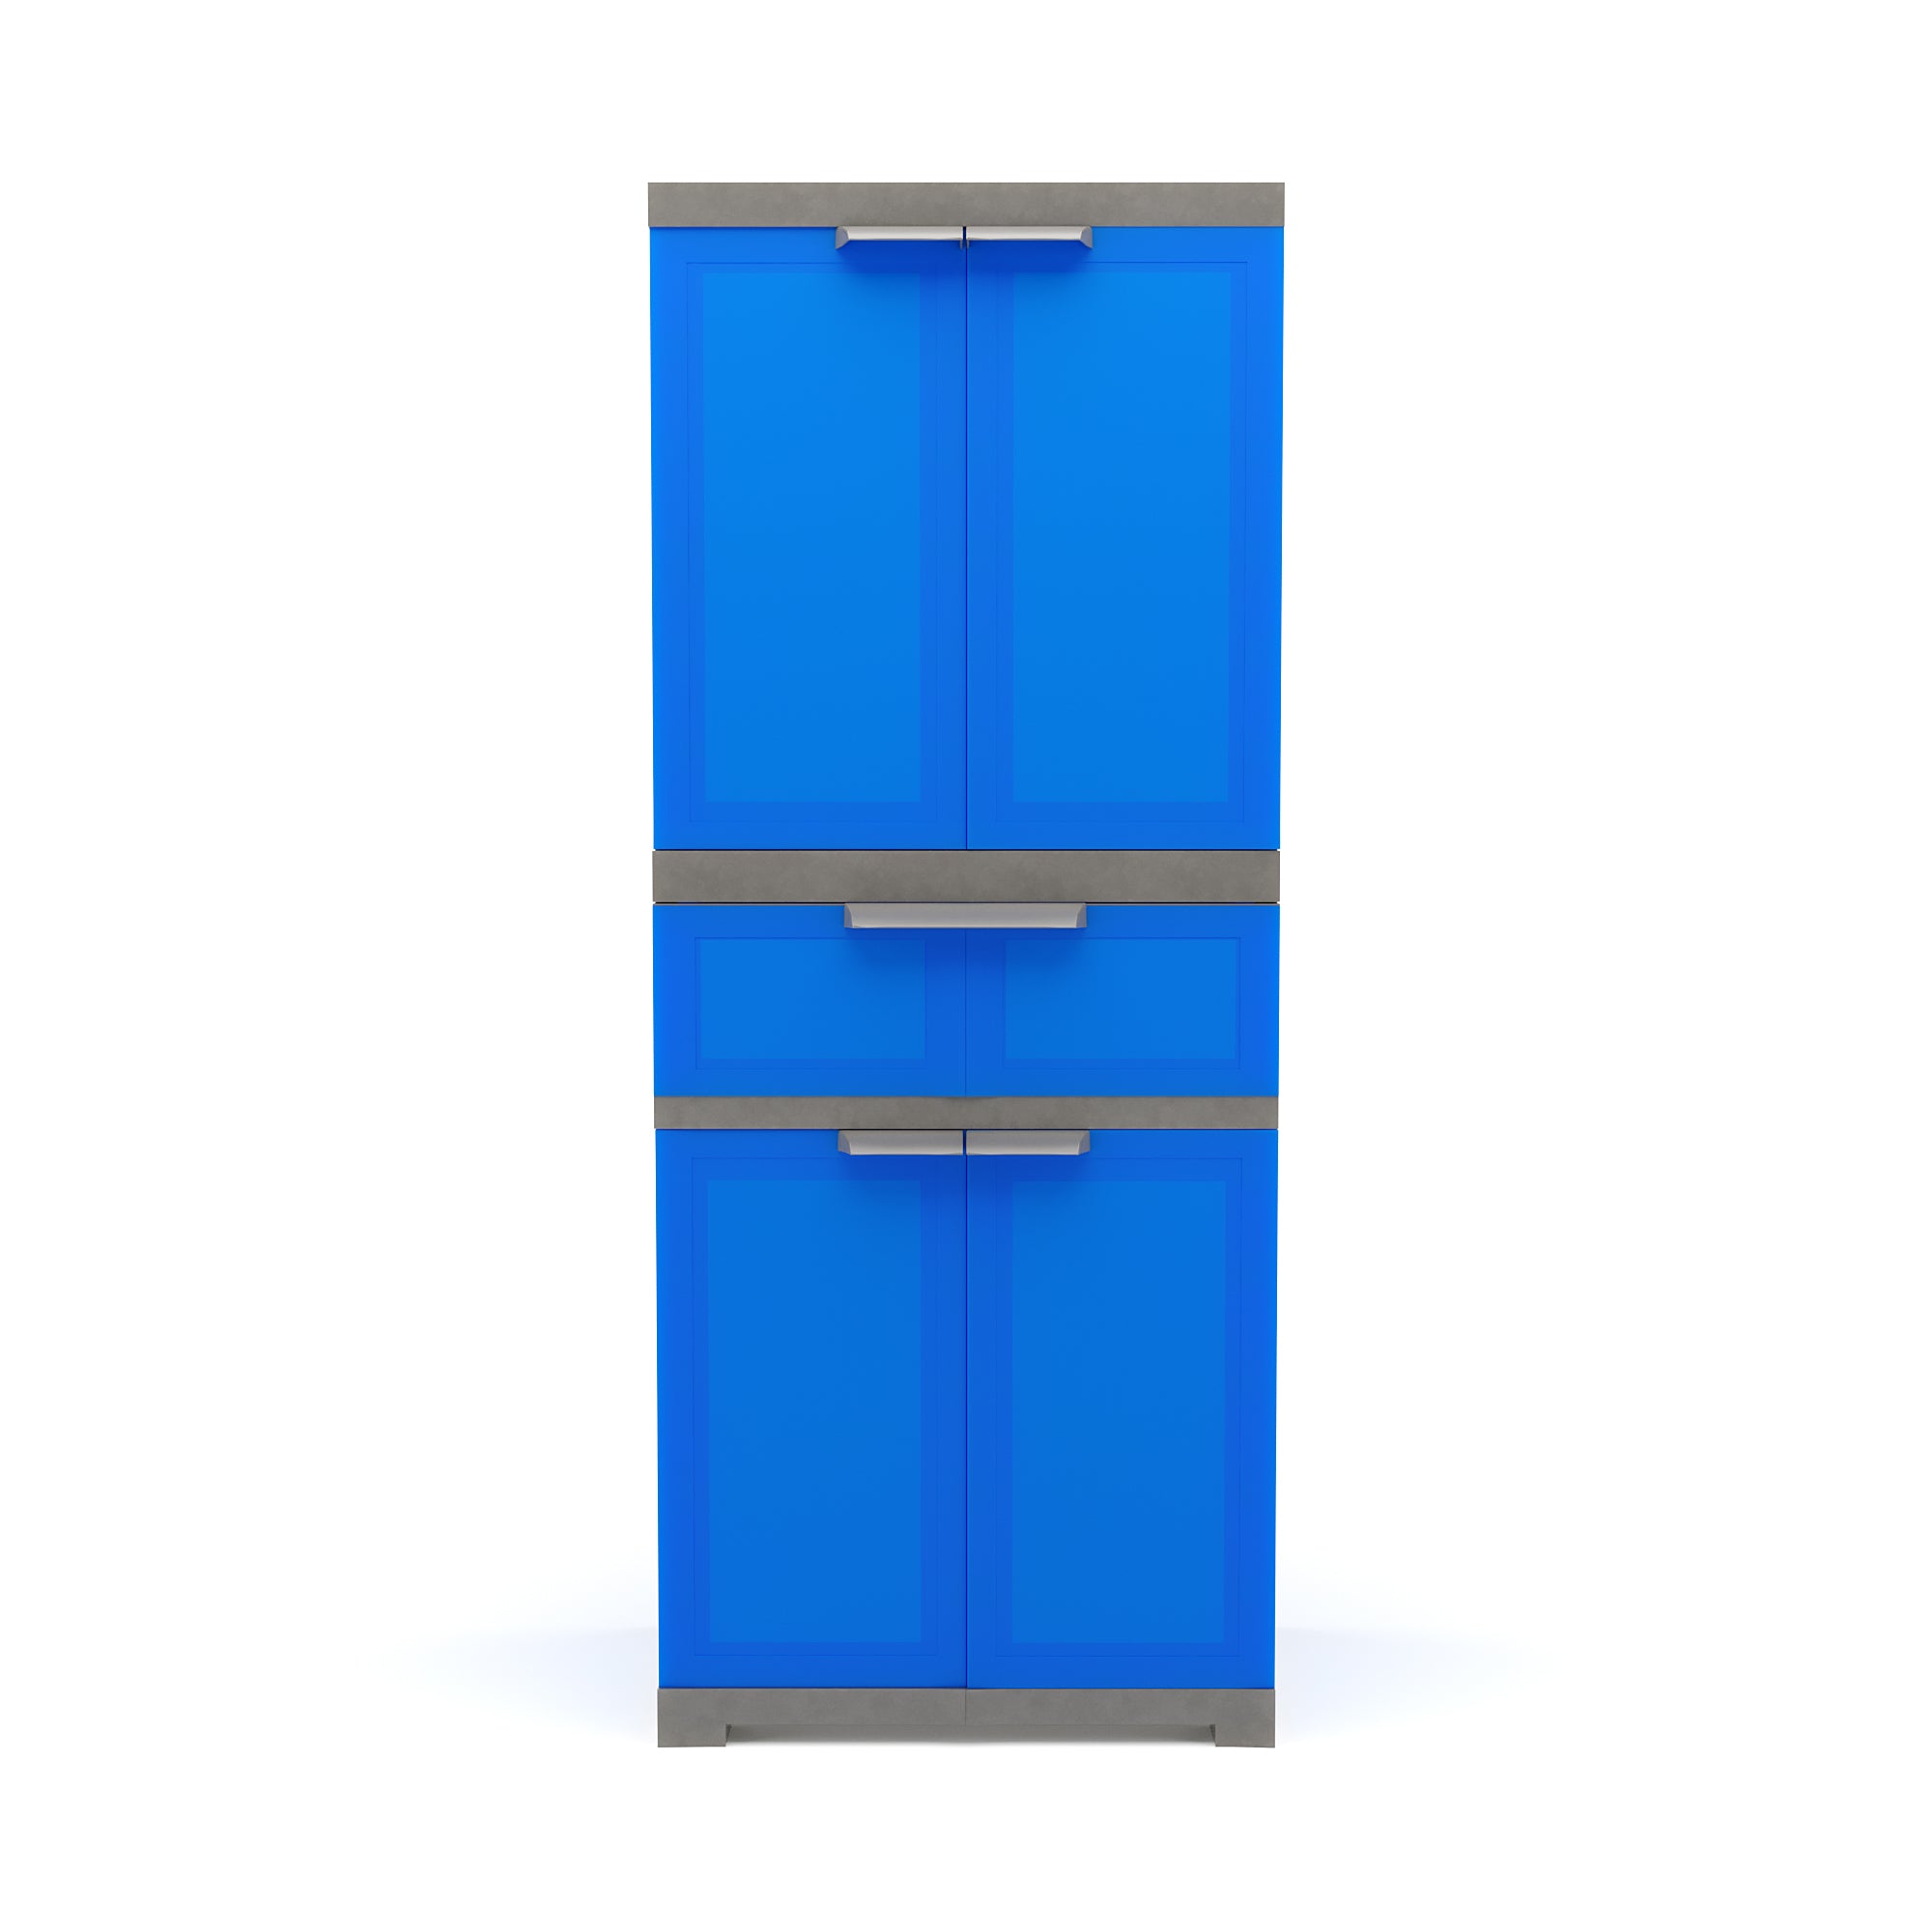 Nilkamal Freedom FMDR 1C Plastic Storage Cabinet with 1 Drawer (Deep Blue & Grey)